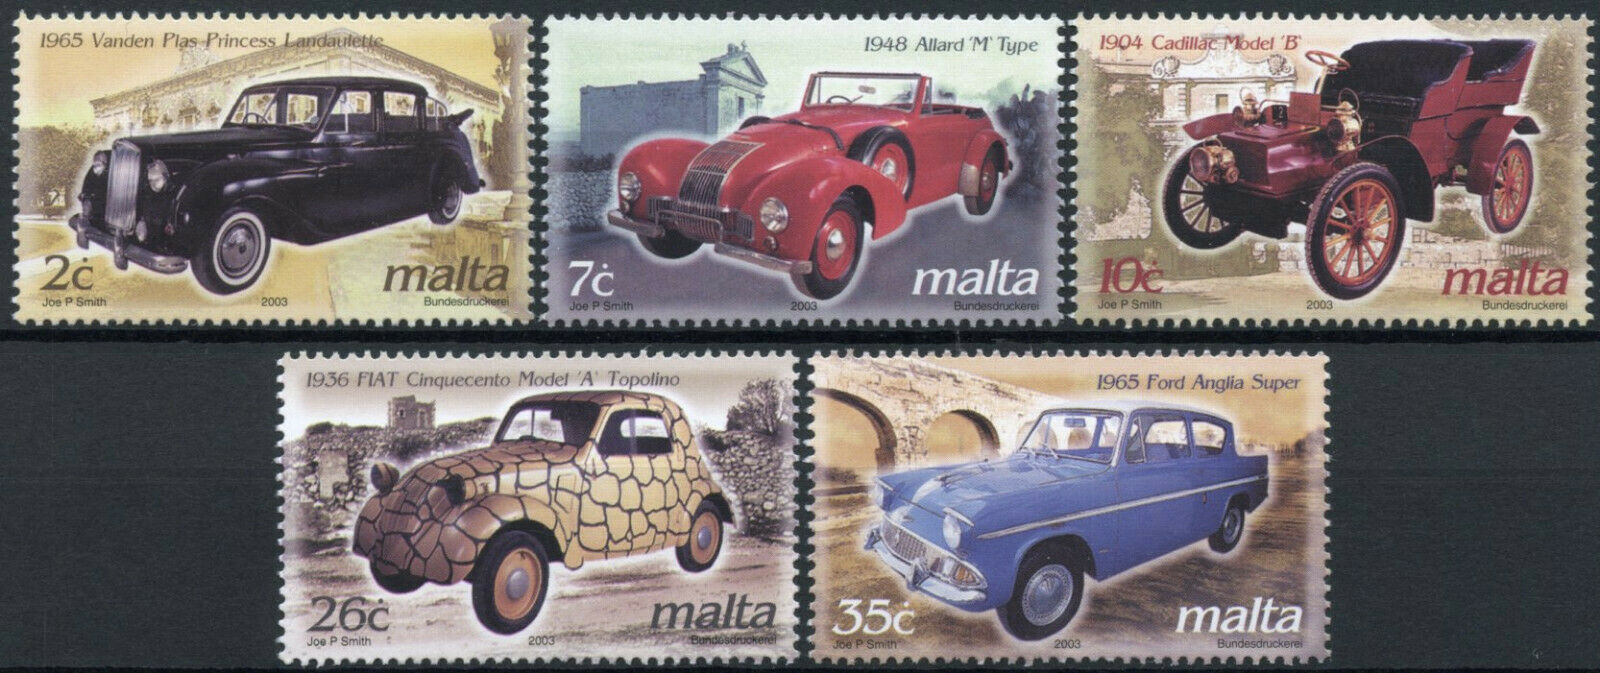 Malta Vintage Cars Stamps 2003 MNH Cadillac Fiat Cinquecento Ford Anglia 5v Set